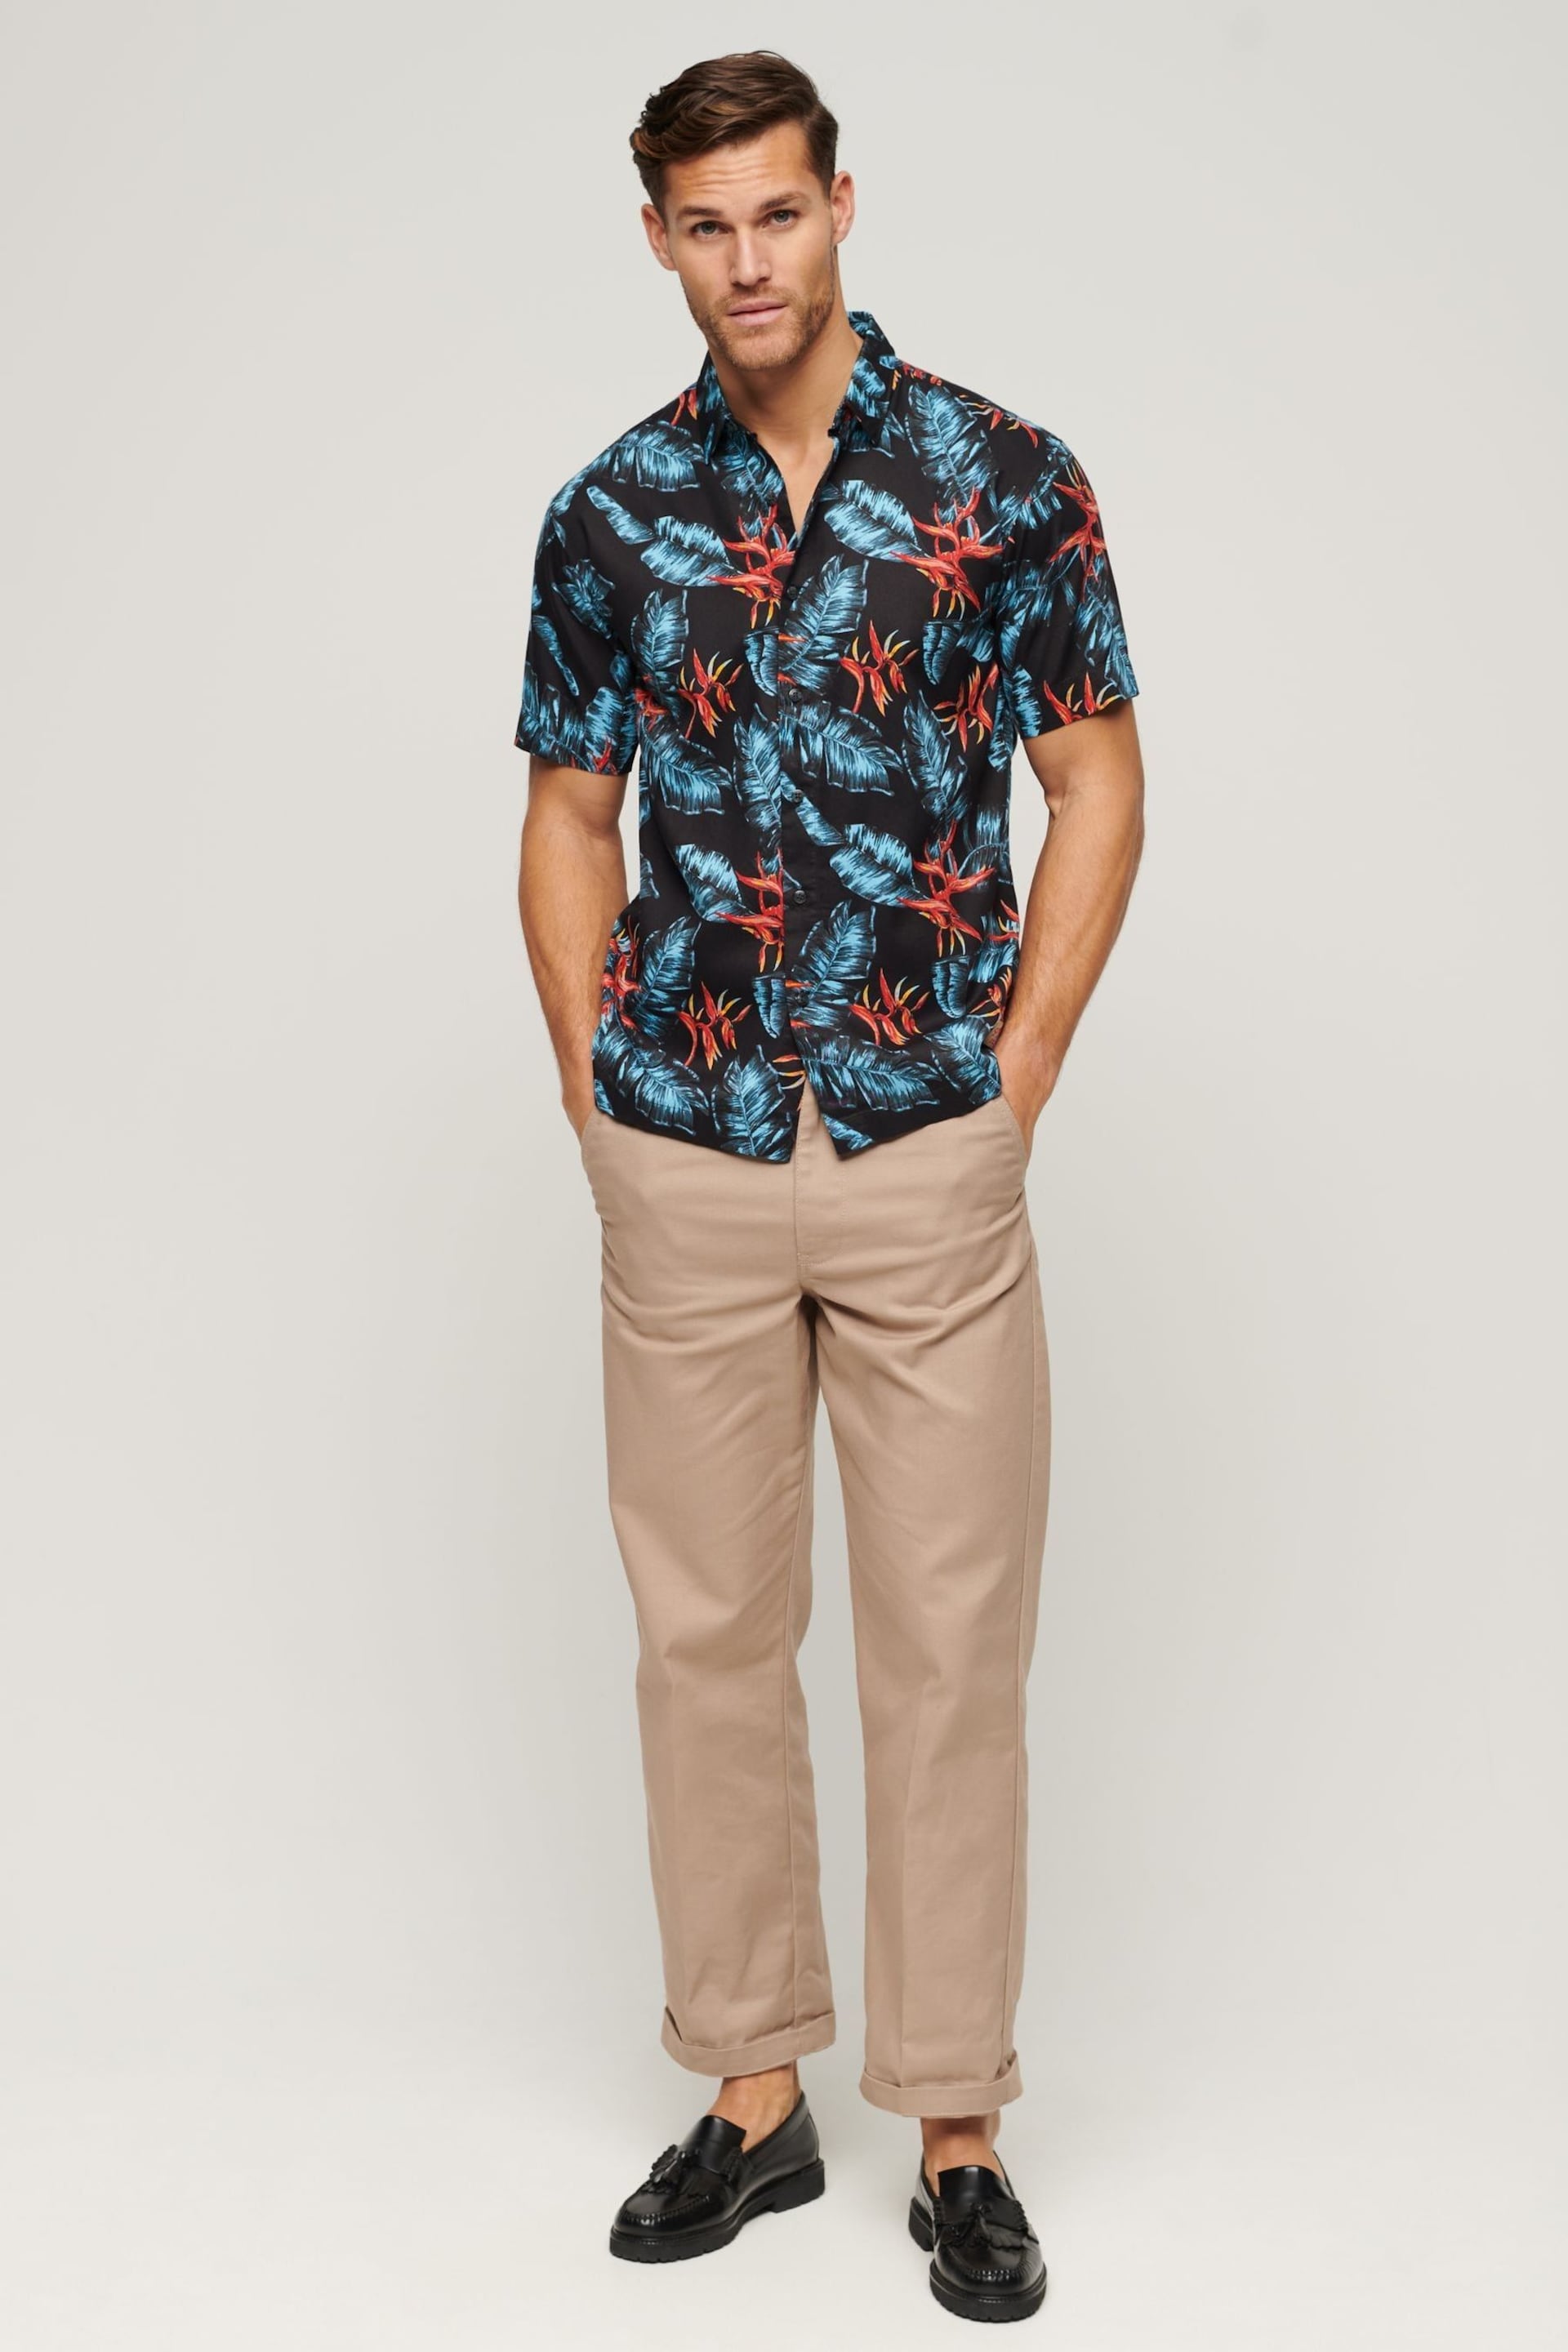 Superdry Blue Short Sleeve Hawaiian Printed Shirt - Image 2 of 6